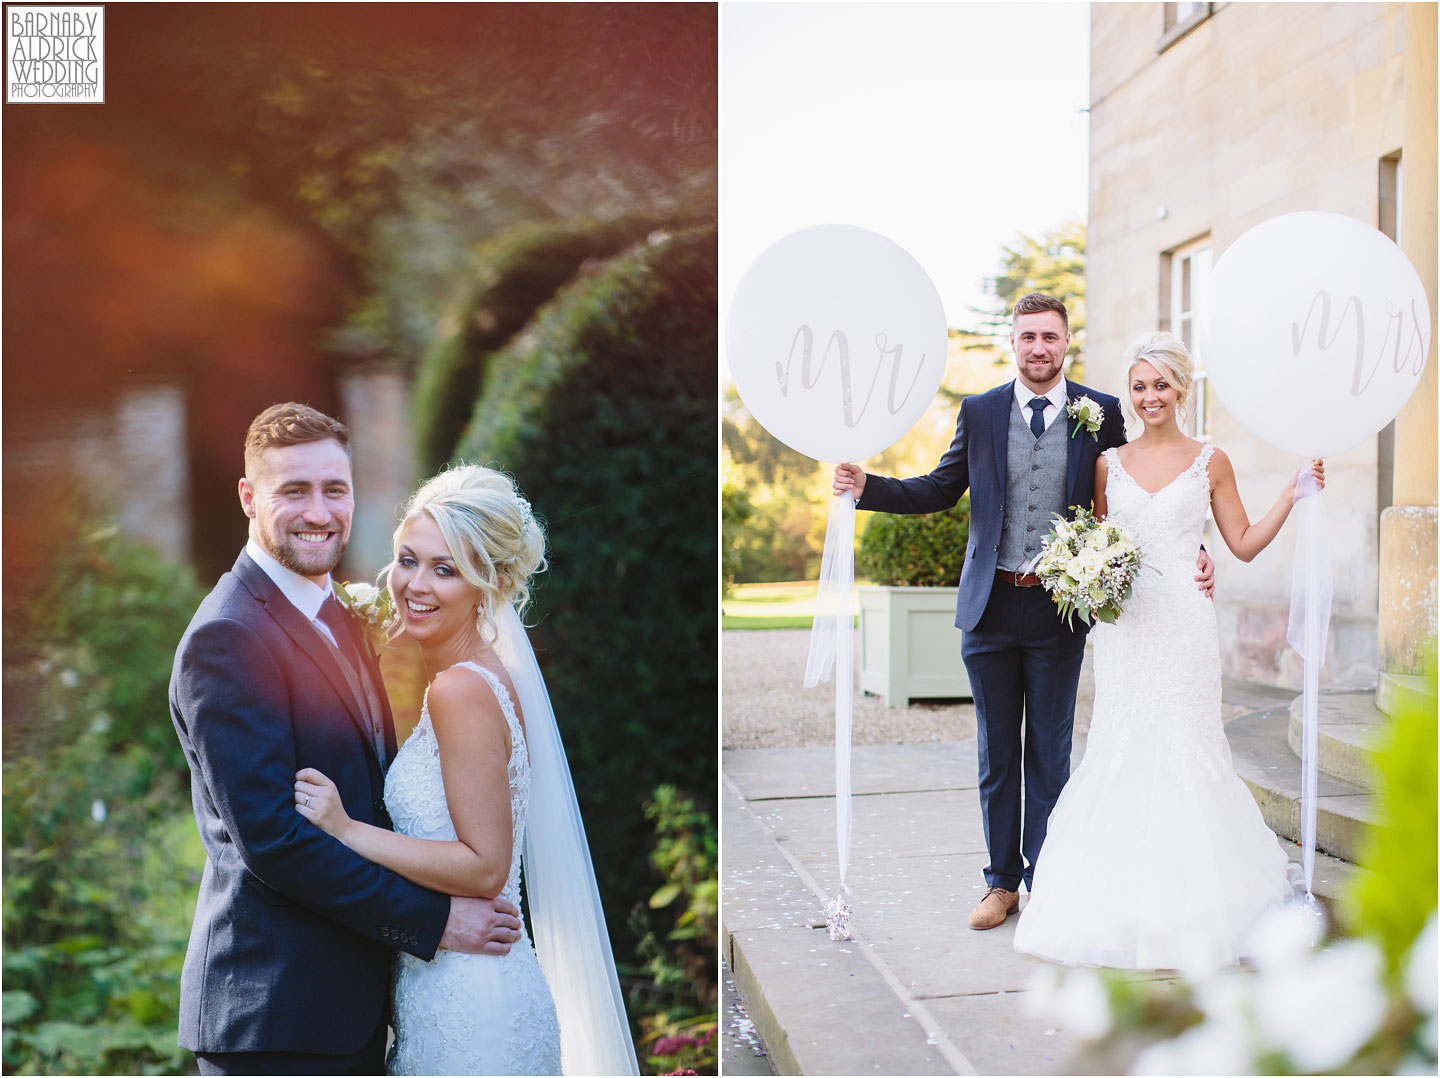 Bride and groom balloon photos at Saltmarshe Hall Wedding Photos, Wedding photography at Saltmarshe Hall, East Yorkshire Wedding Photos